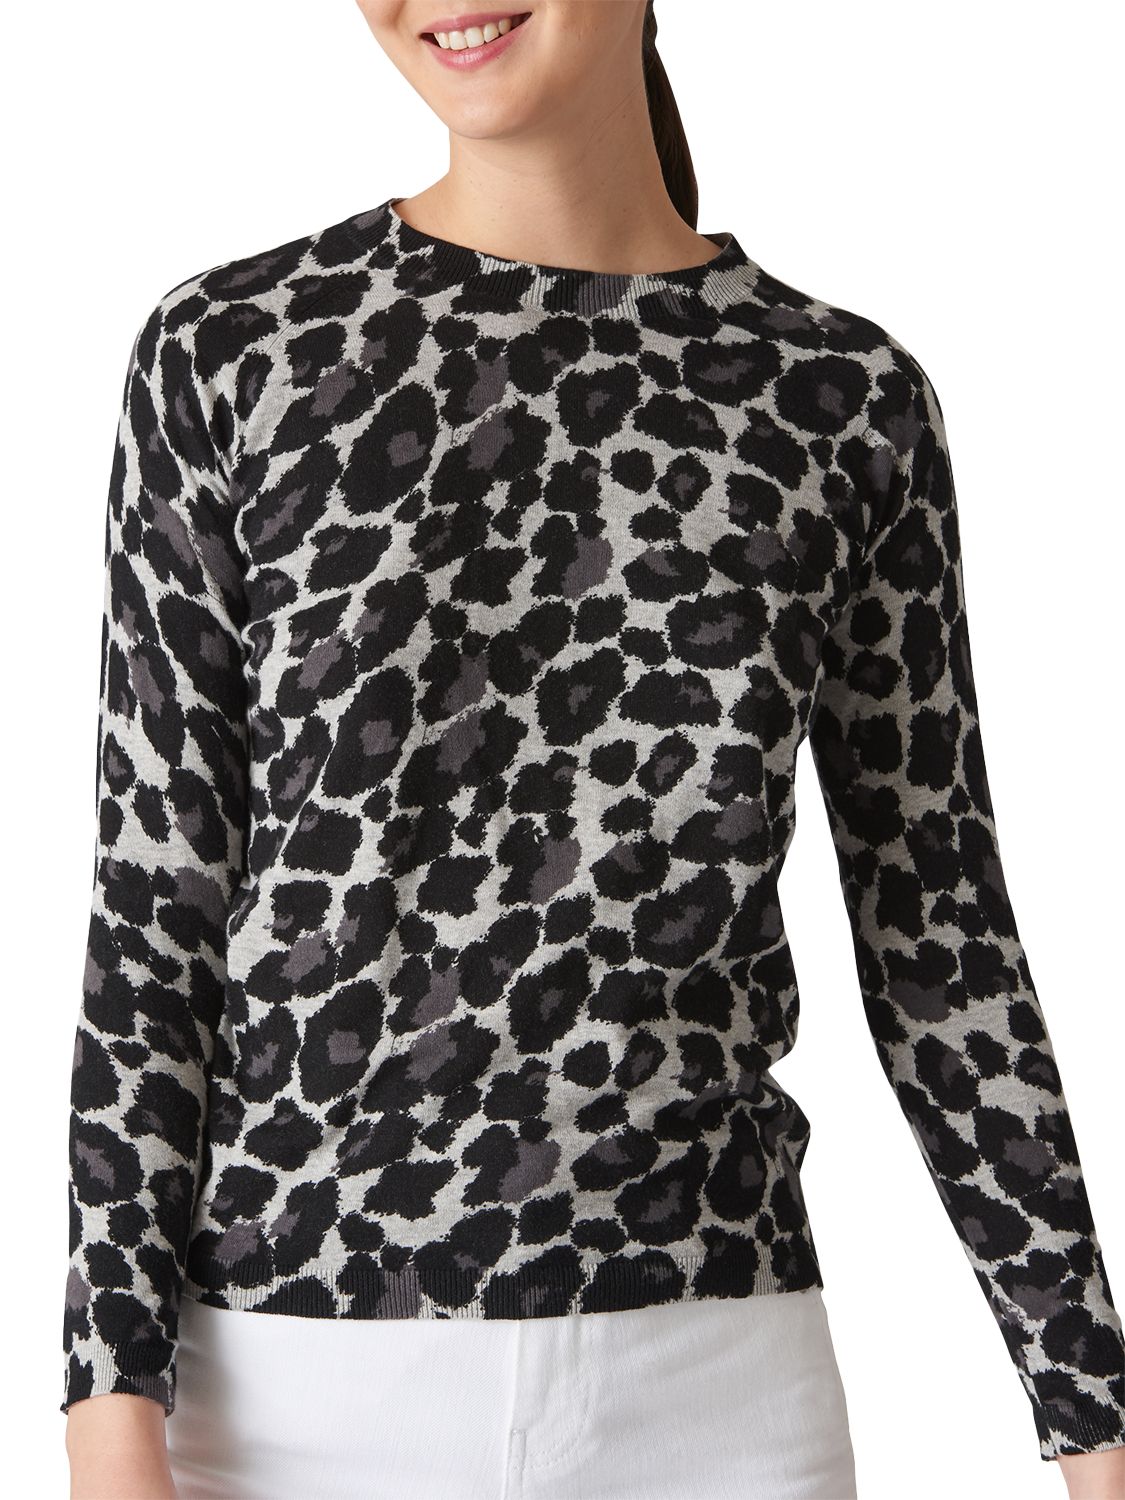 whistles leopard print sweatshirt